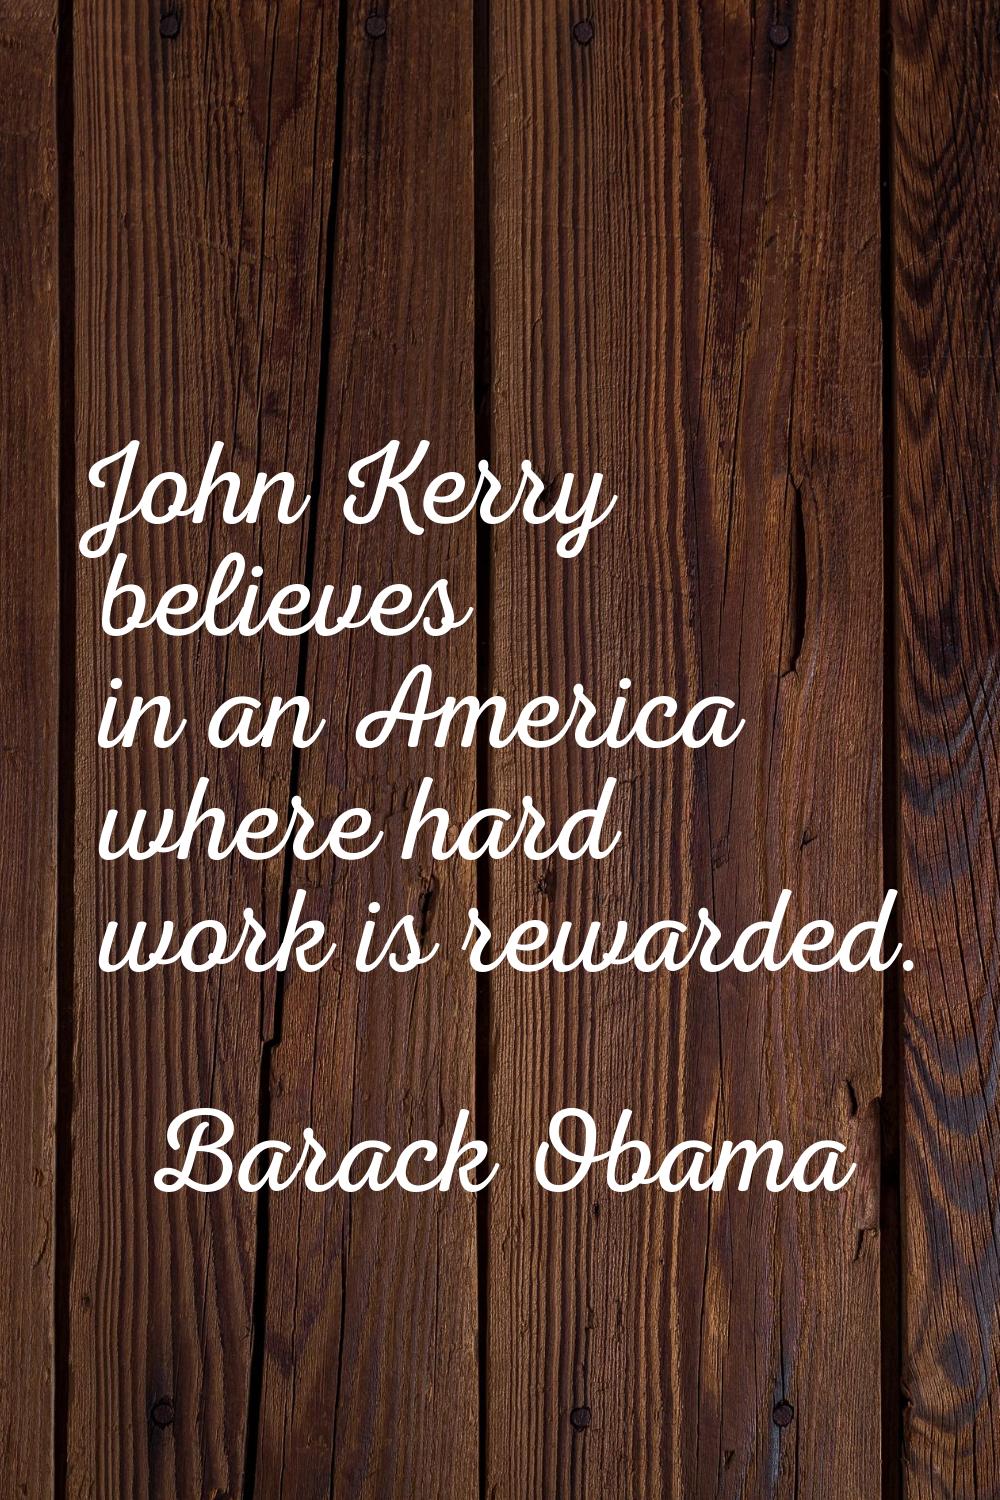 John Kerry believes in an America where hard work is rewarded.